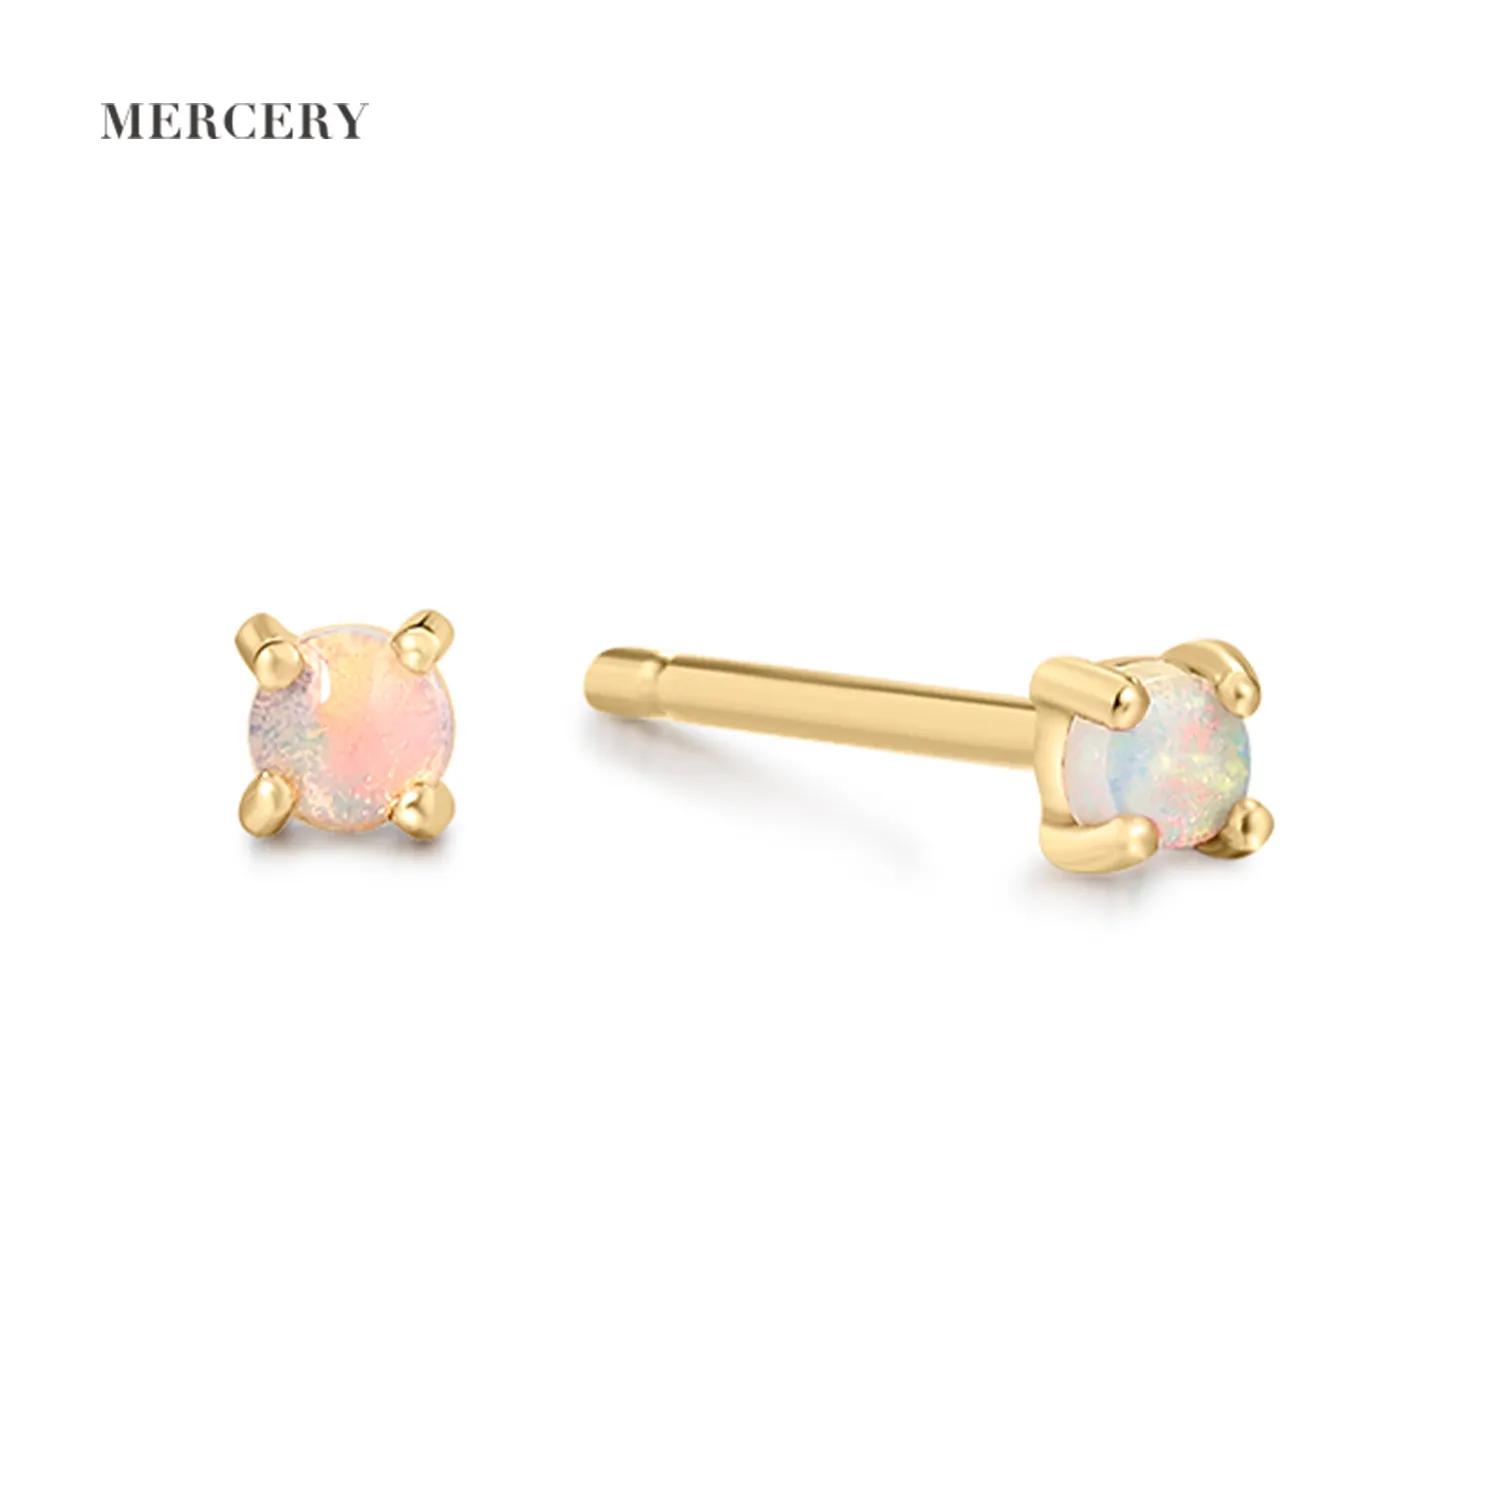 Mercery 925 Silver Earrings Colorful Opal Stud Earrings 14K Gold Plated Earrings Fashion Classic Style